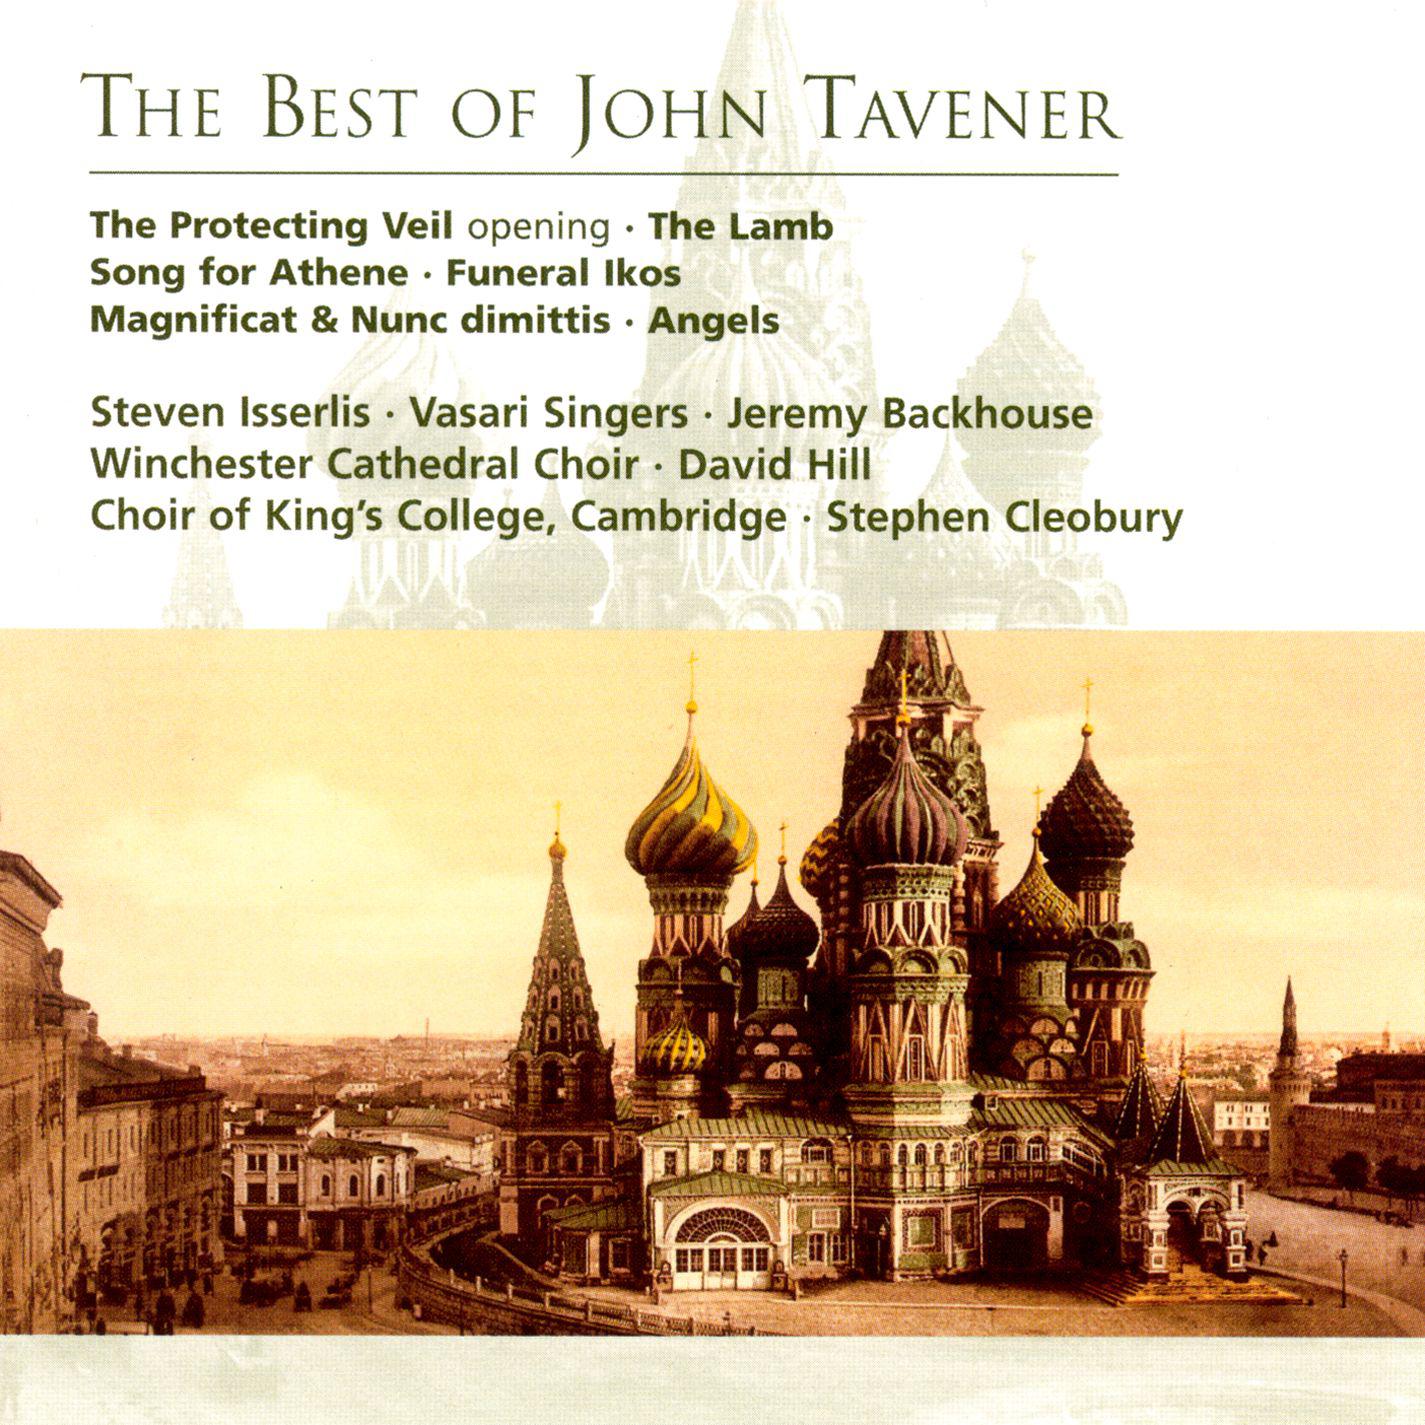 The Best of John Tavener